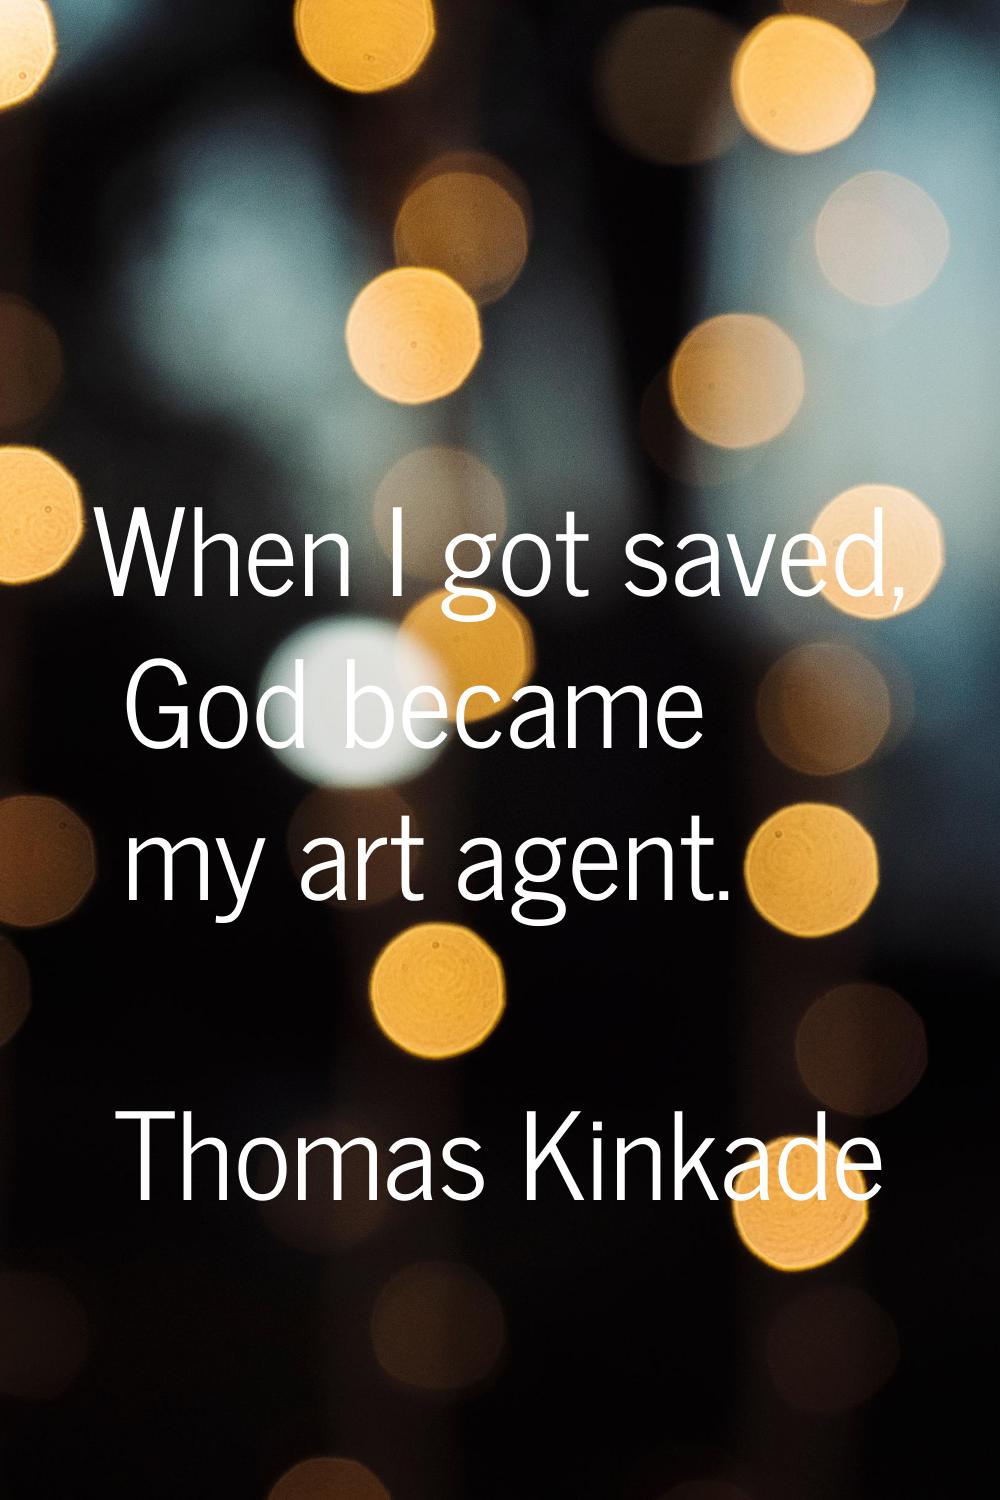 When I got saved, God became my art agent.